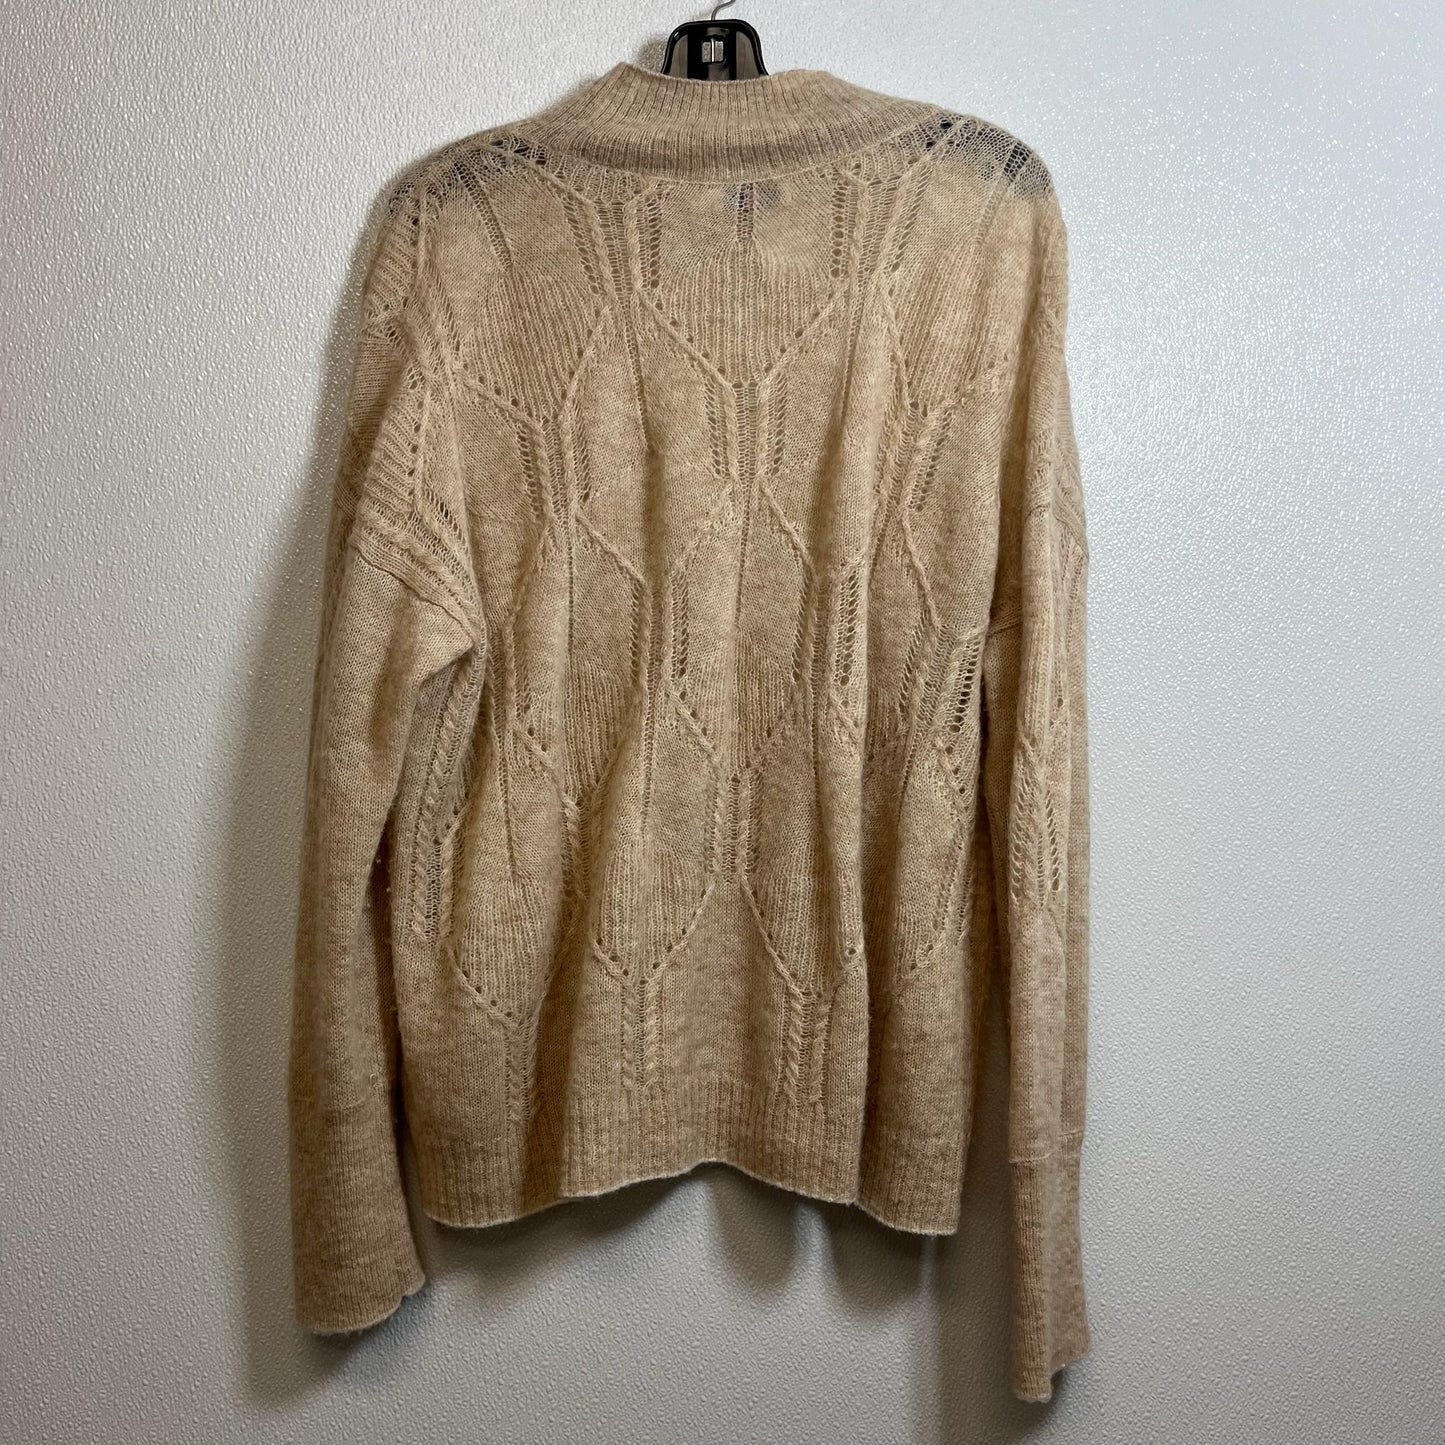 Sweater By Vineyard Vines  Size: Xl